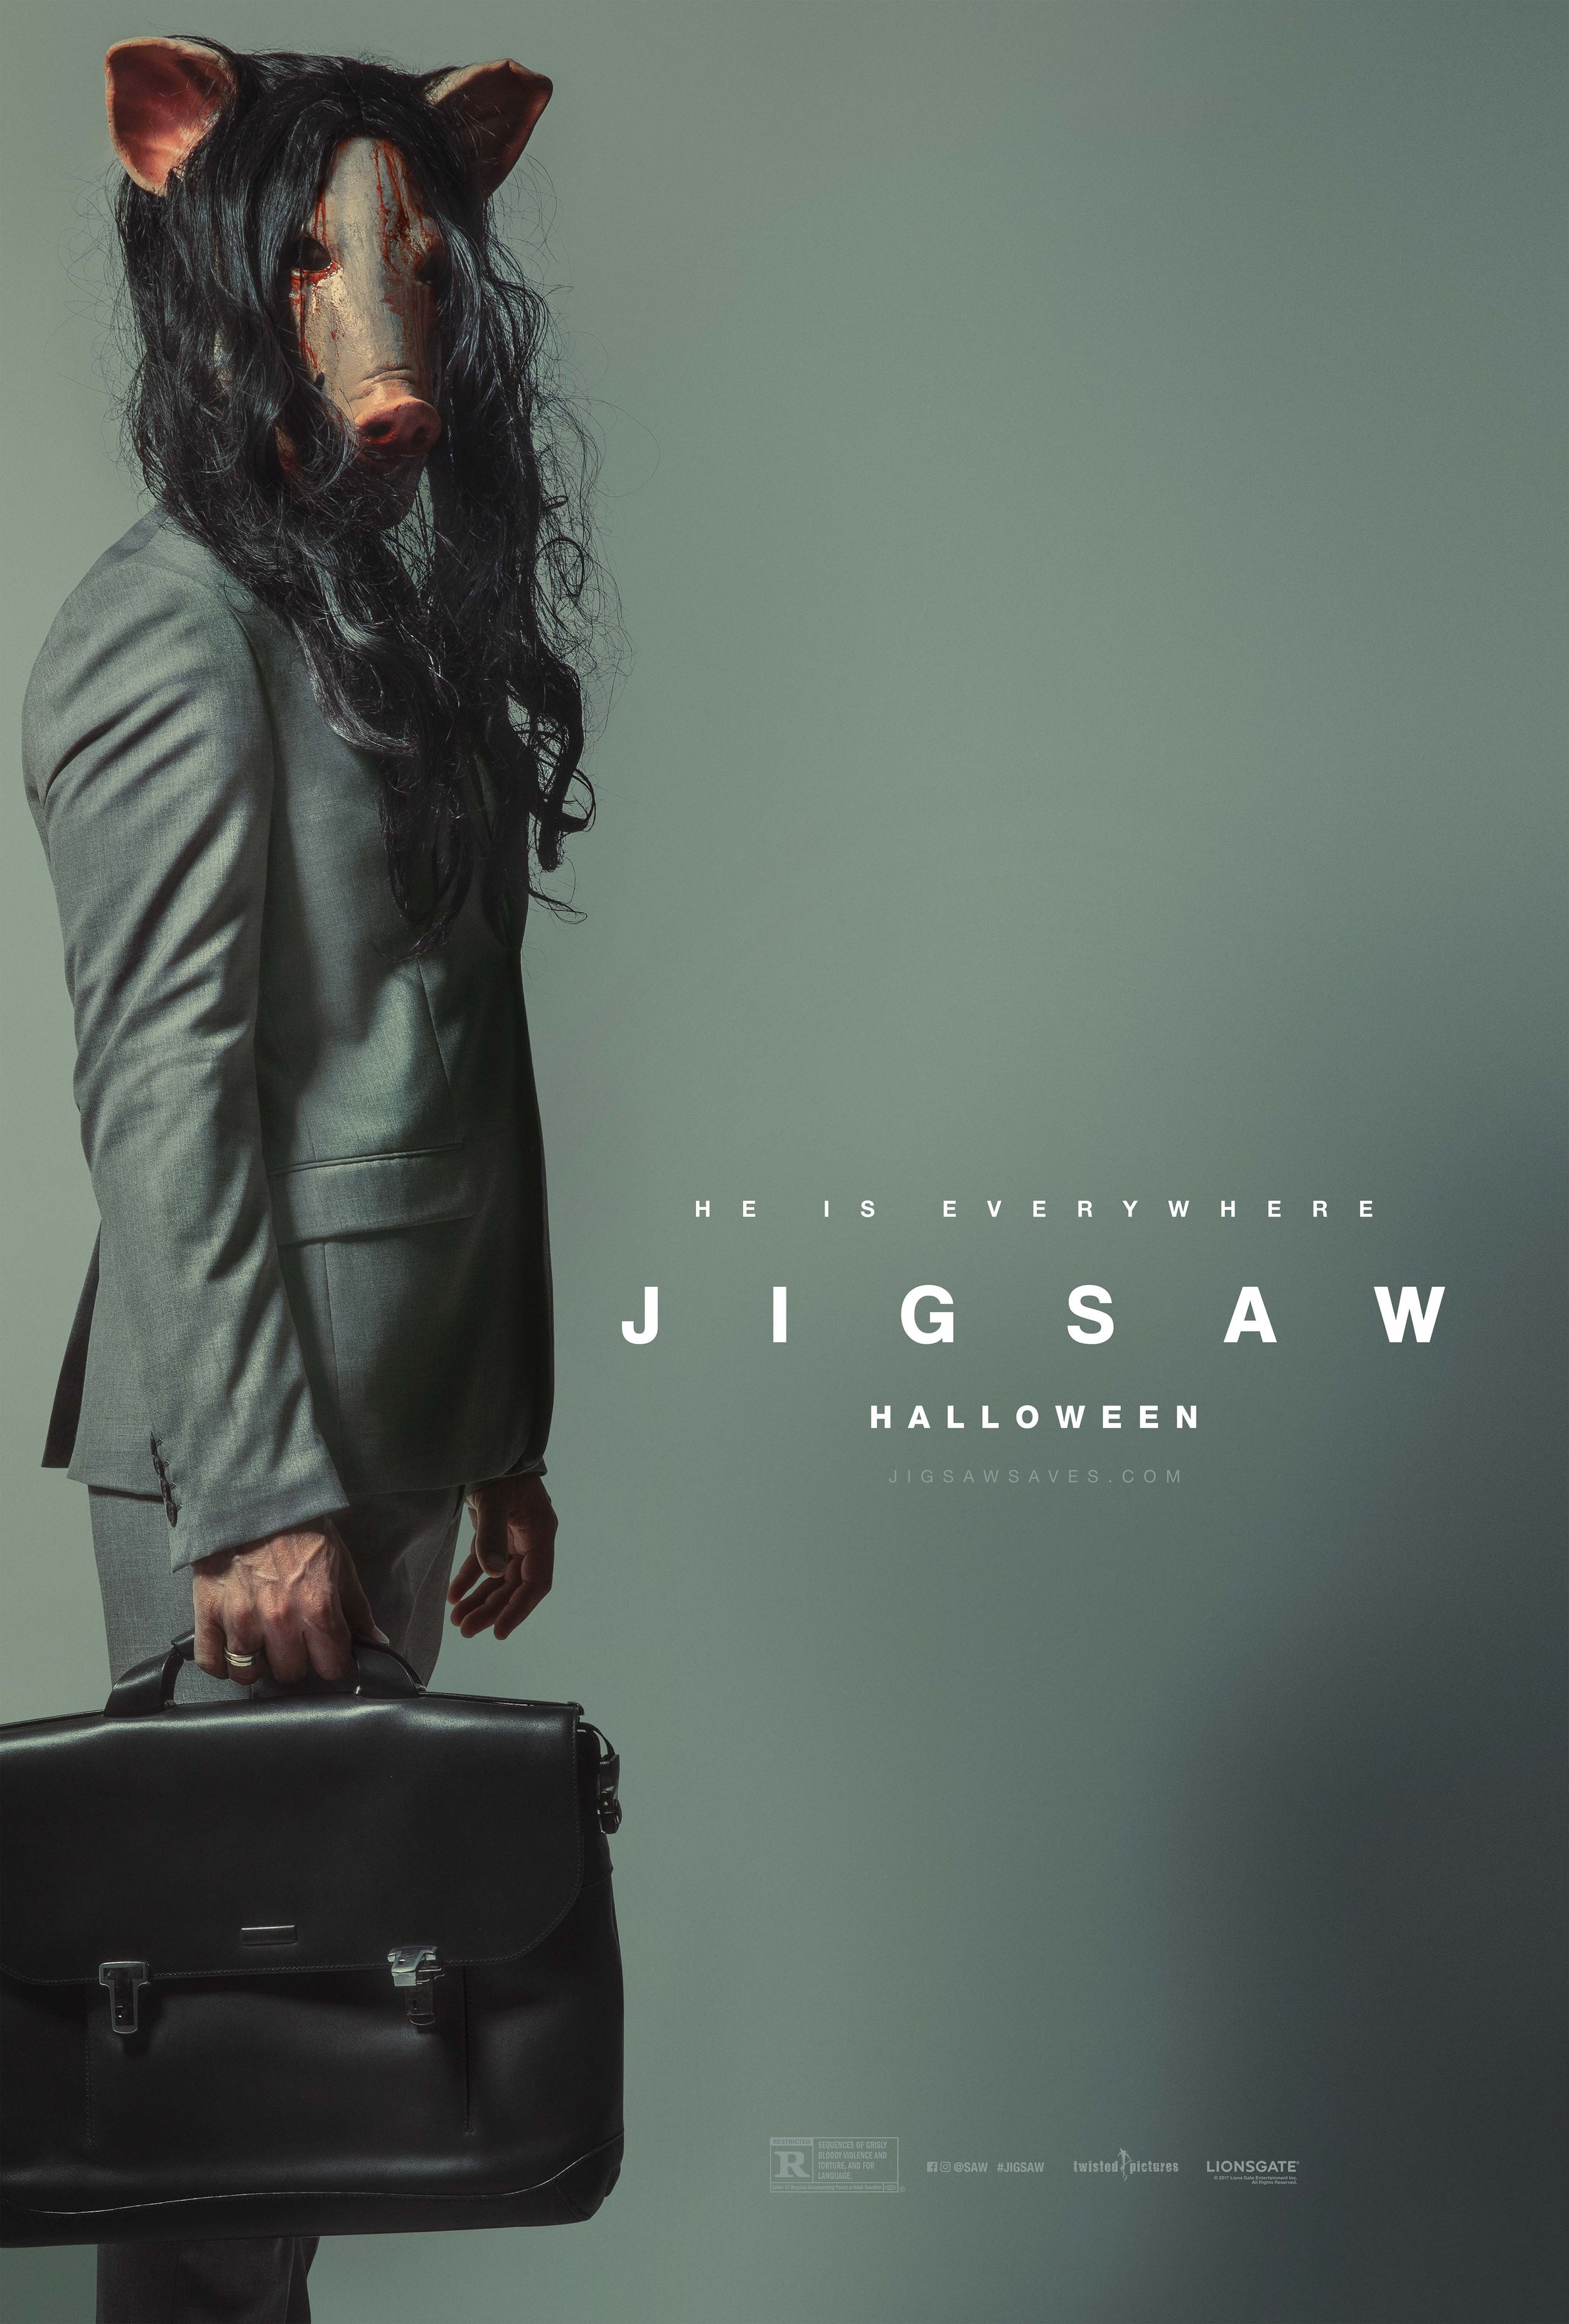 Jigsaw: He is Everywhere